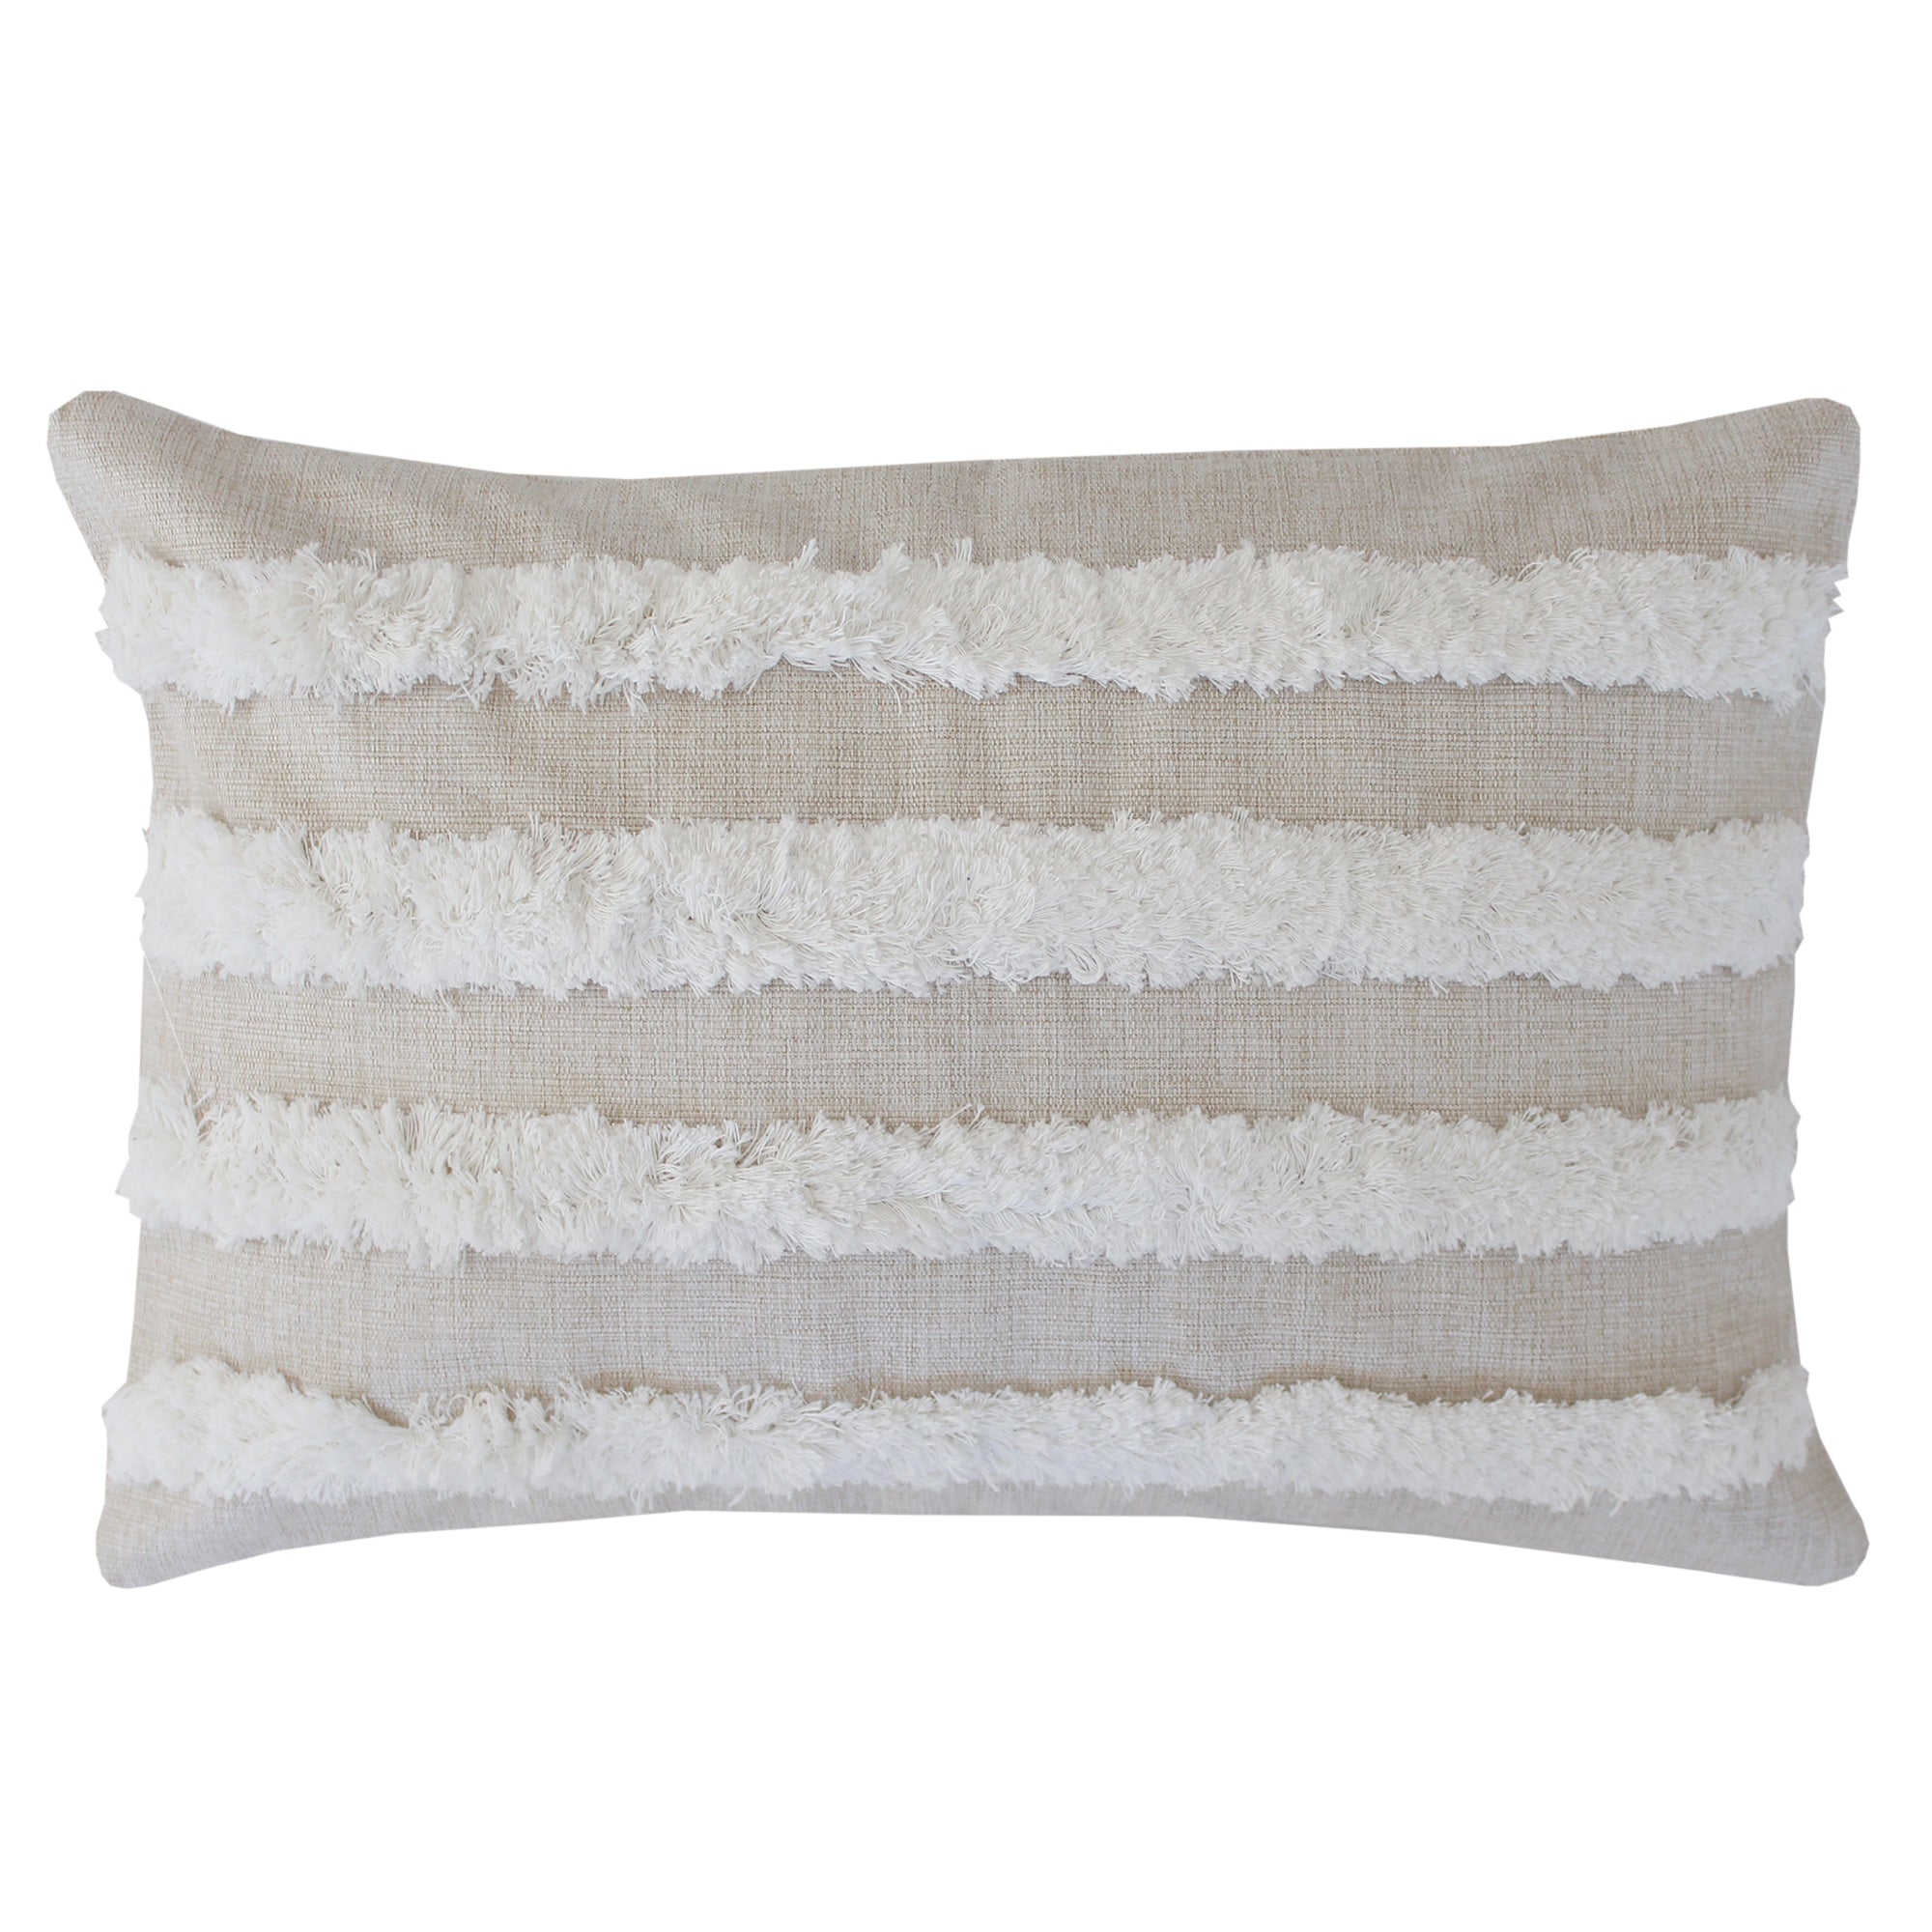 cushion-cover-boho-textured-single-sided-bali-hai-35cm-x-50cm